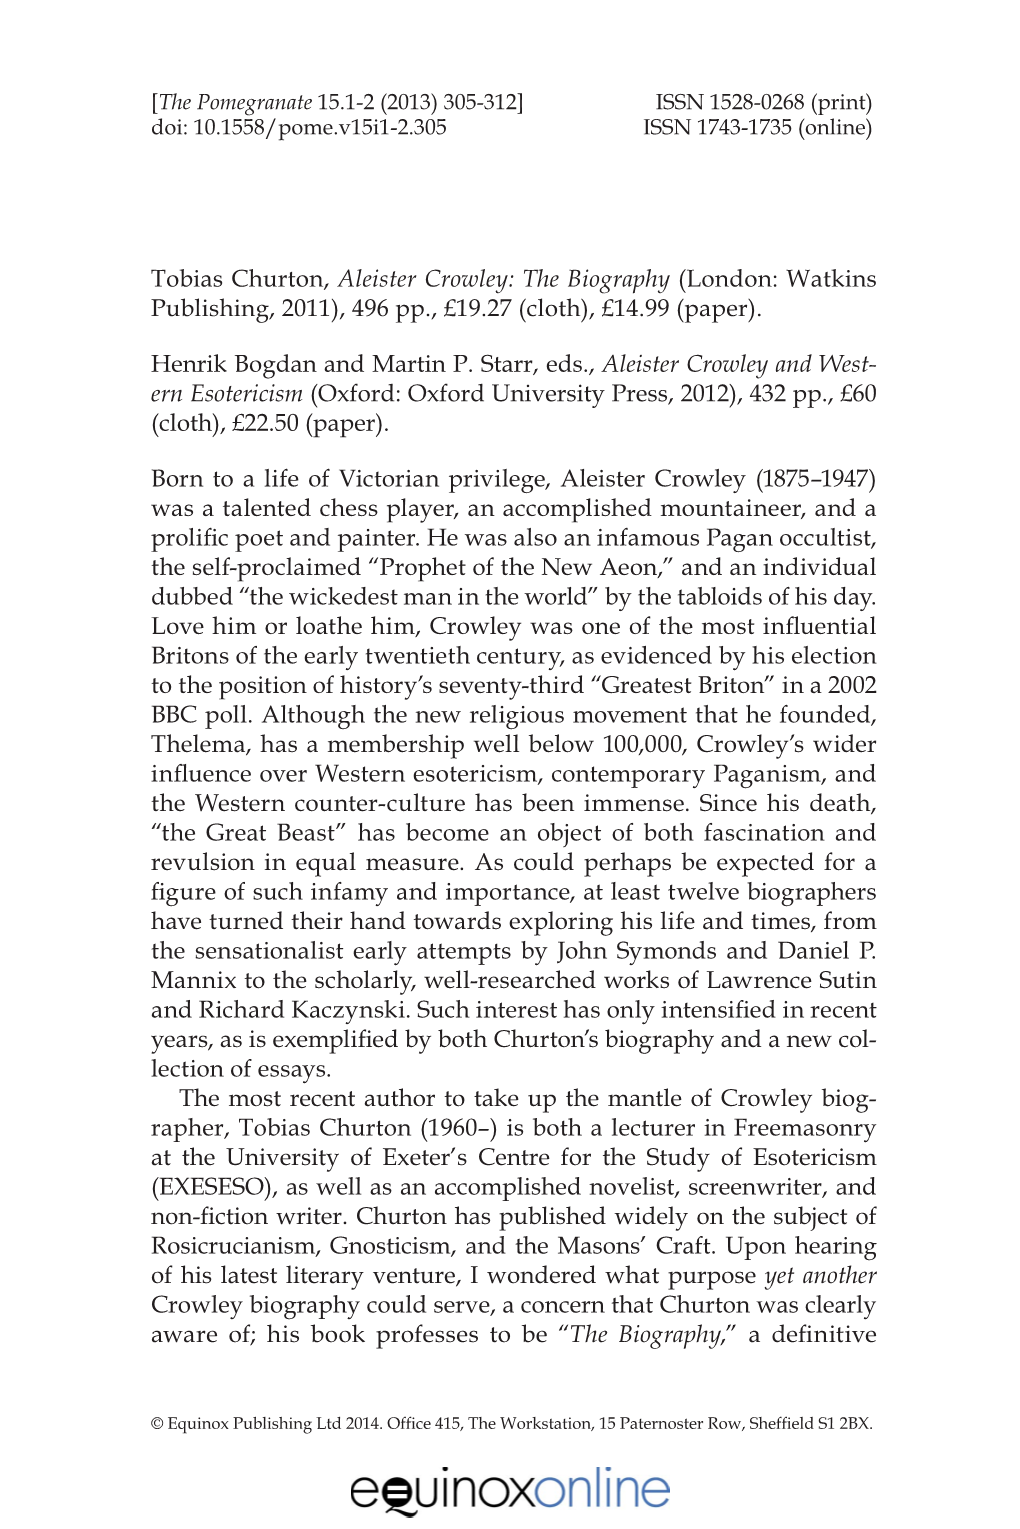 Tobias Churton, Aleister Crowley: the Biography (London: Watkins Publishing, 2011), 496 Pp., £19.27 (Cloth), £14.99 (Paper)